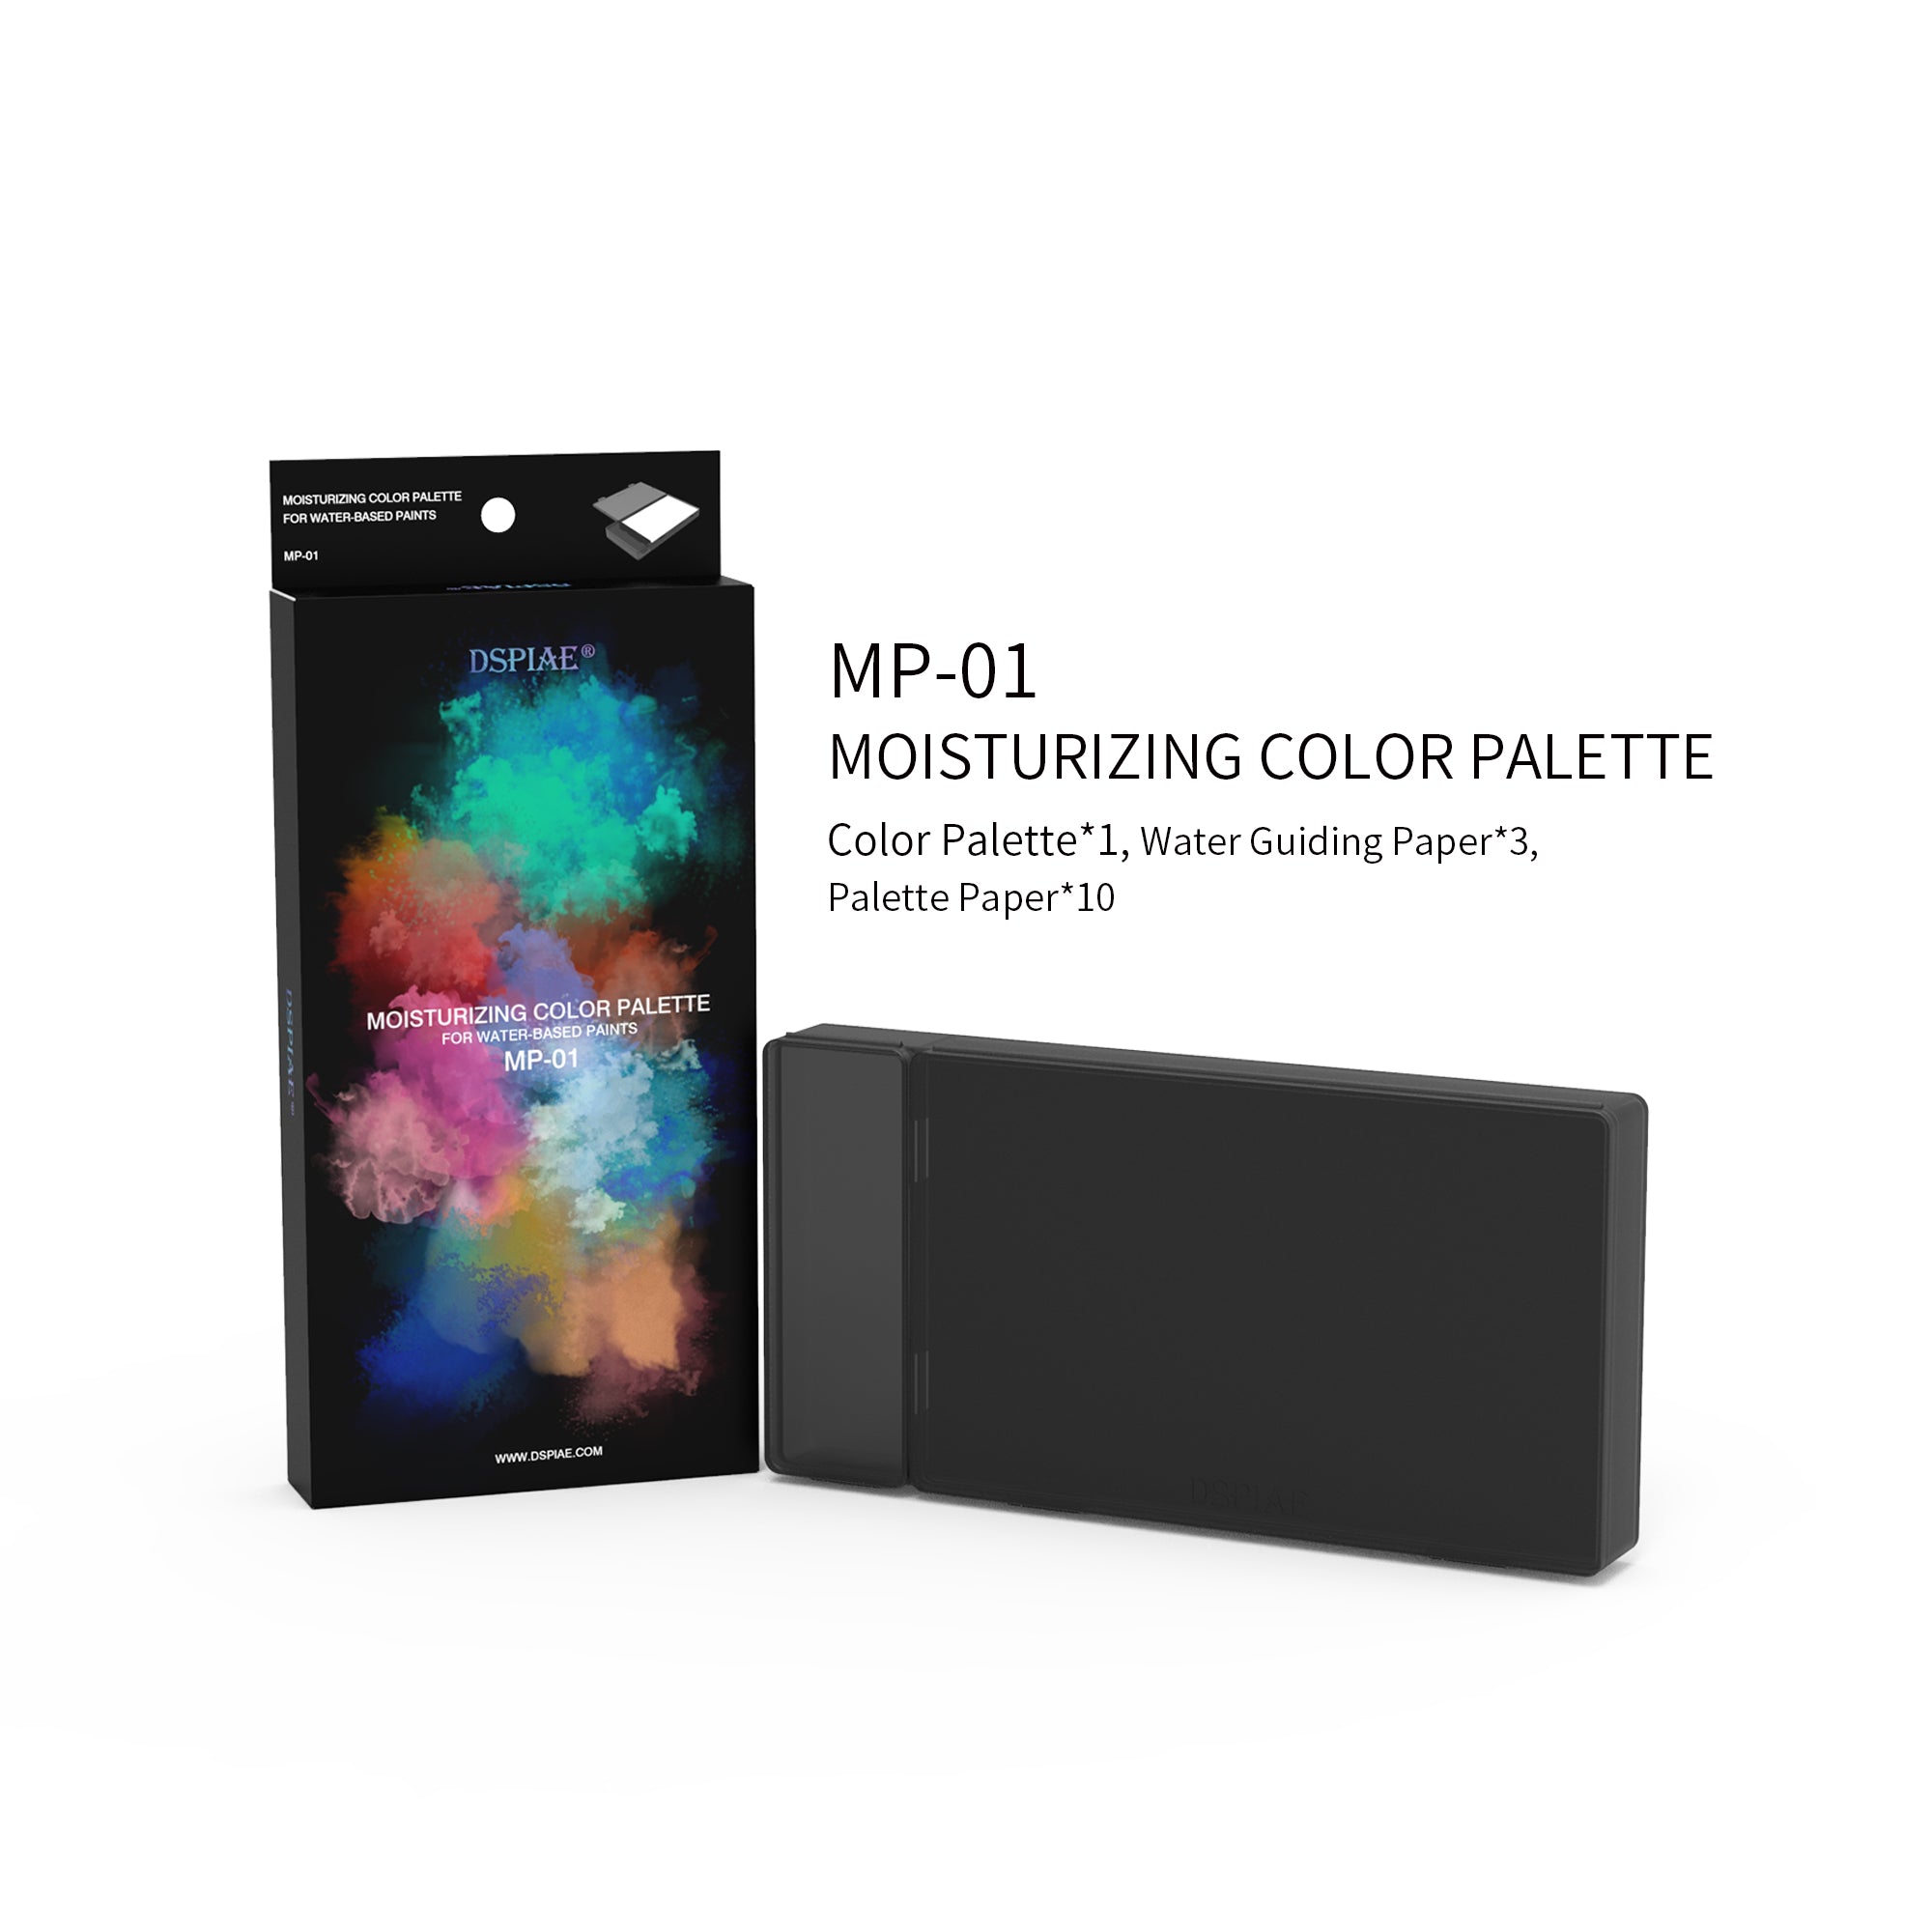 DSPIAE - MP-01 Moisture-retaining Palette
For Acrylic Paints